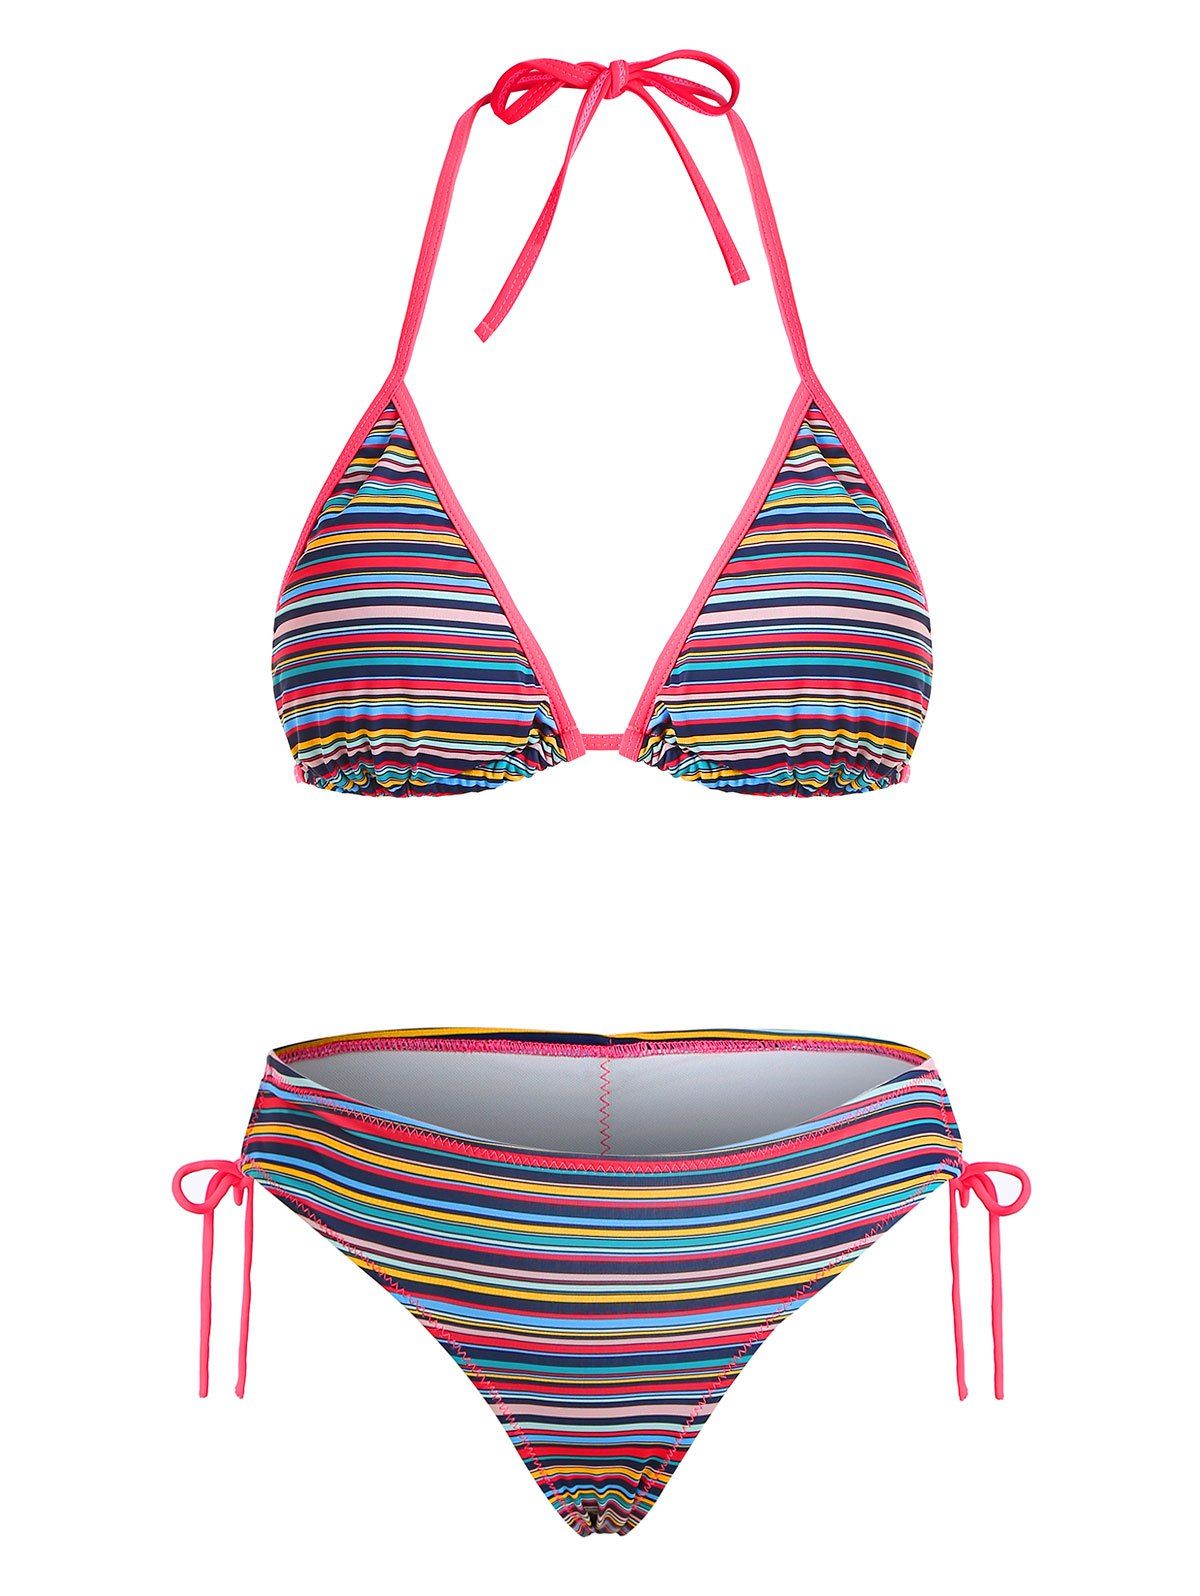 Striped Rainbow Bikini Swimsuit Binding Tie Sexy Swimwear Set - COLORMIX M